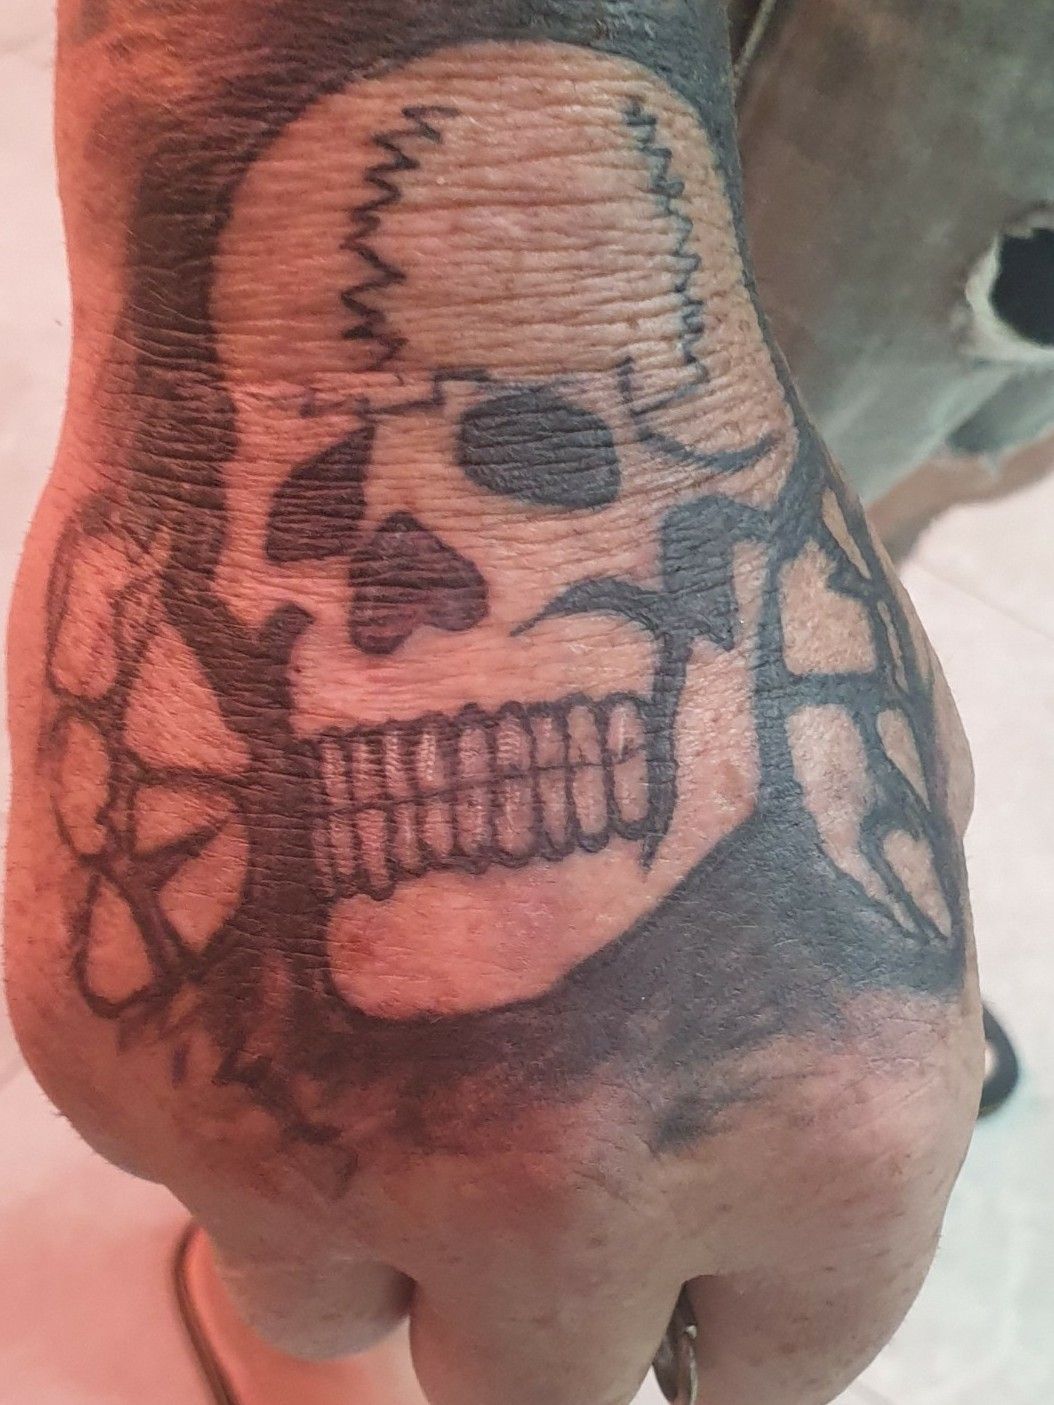 Tattoo uploaded by Wes Newton • Ss Scull hand tattoo • Tattoodo